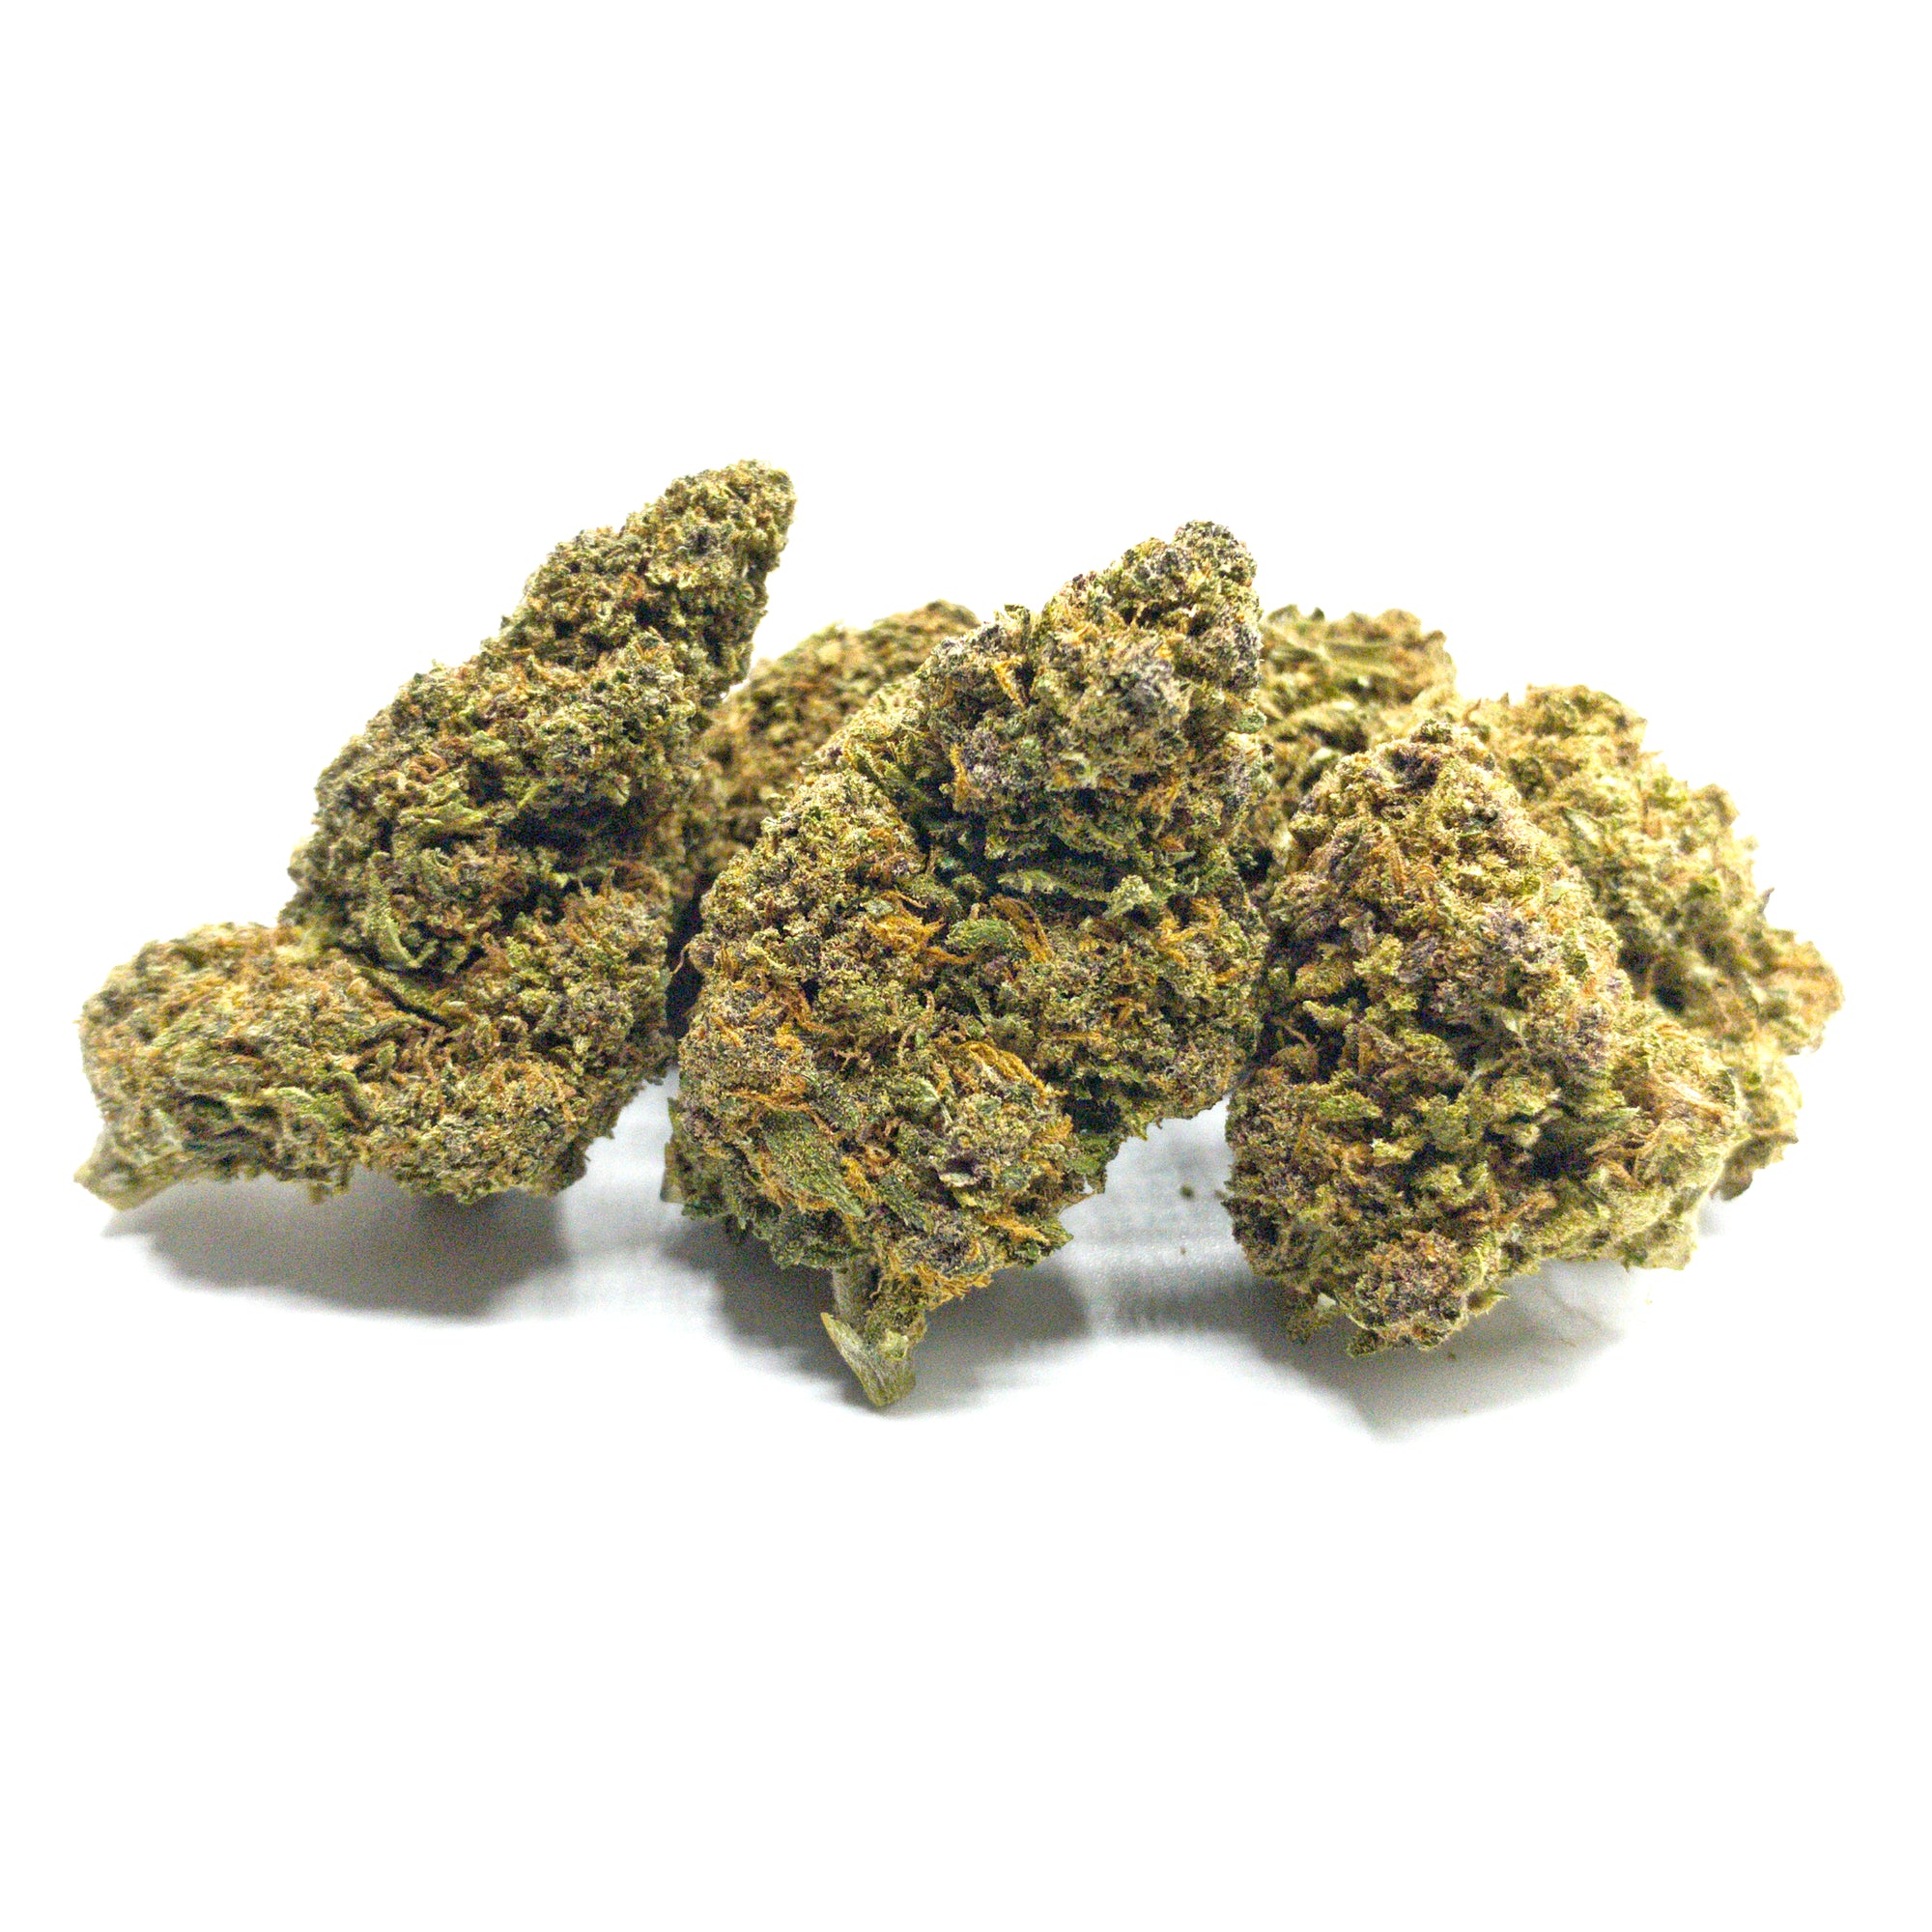 Wholesale Hemp Flower and CBD Flower - BackWoodz Cartel Cannabis